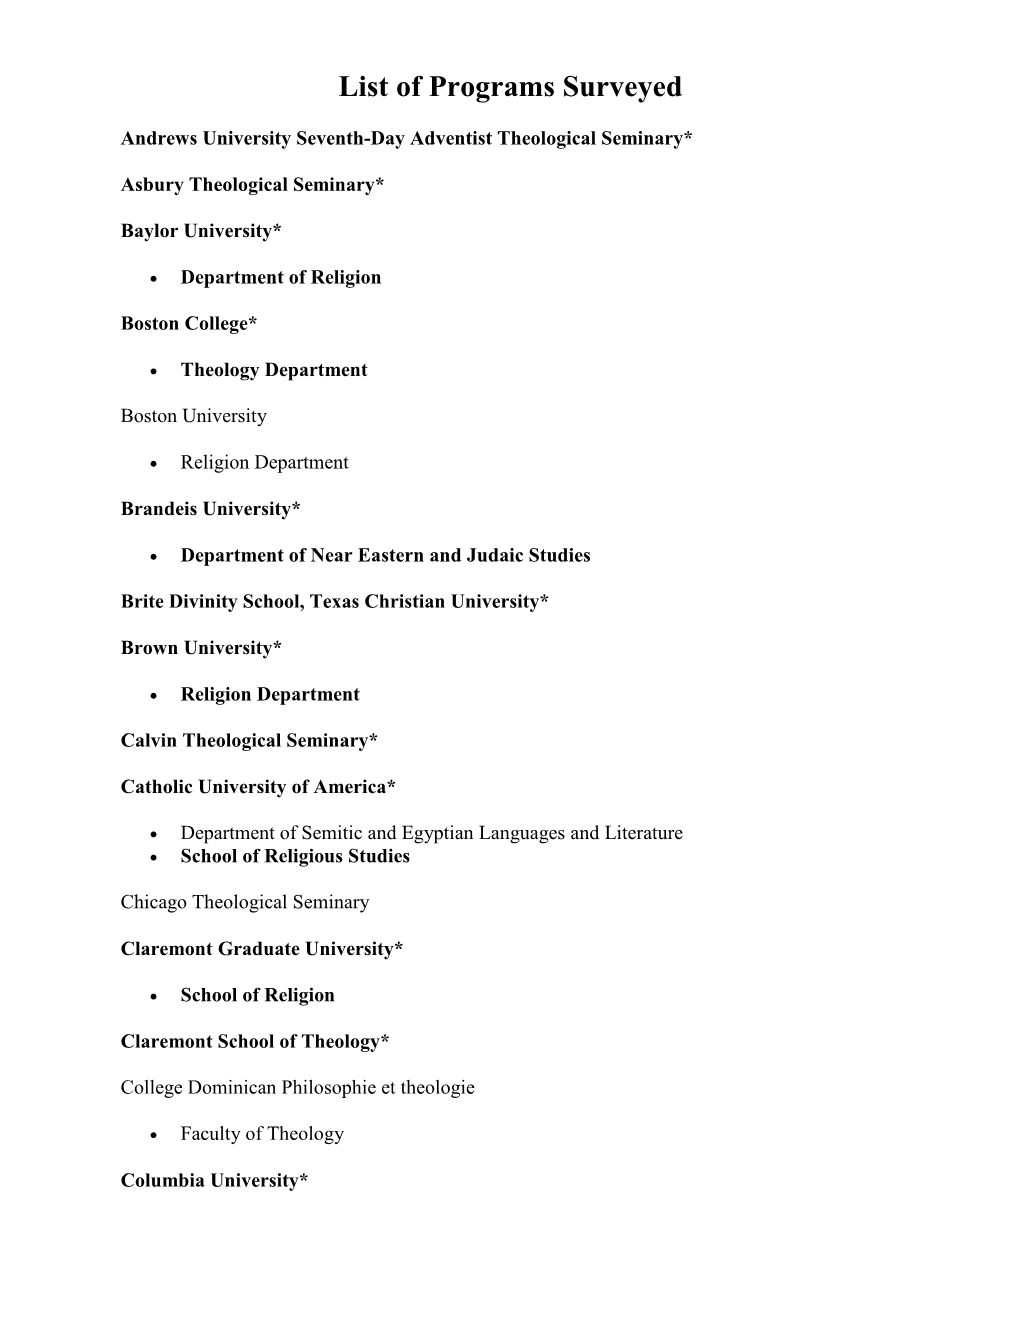 List of Programs Surveyed (PDF)